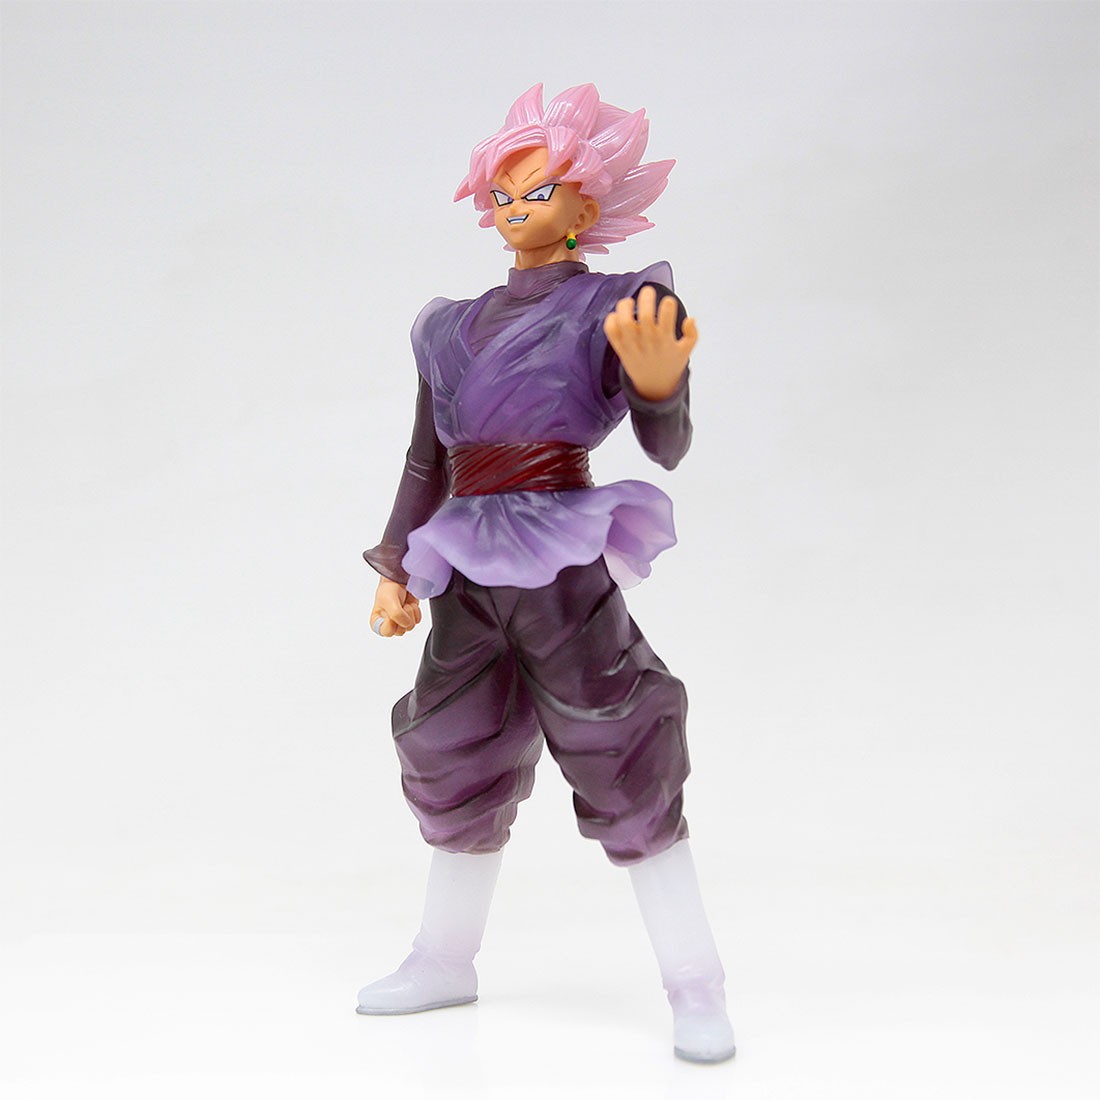 Dragon Ball Super Goku Black Pink Cosplay Wig